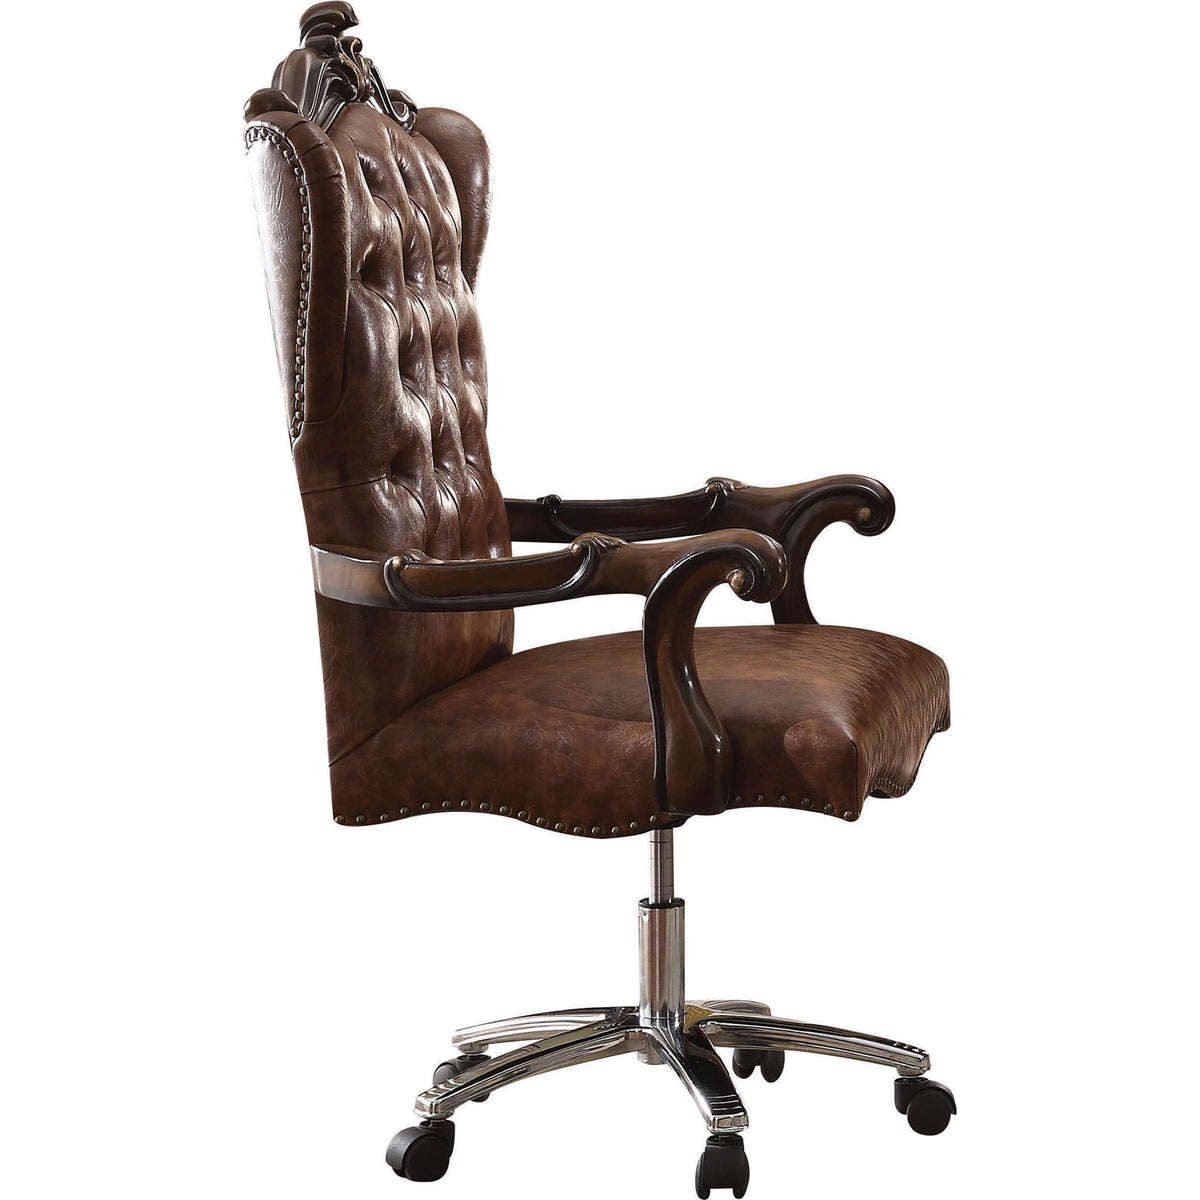 Acme Furniture Versailles 92282 Executive Office Chair - Light Brown PU & Cherry Oak